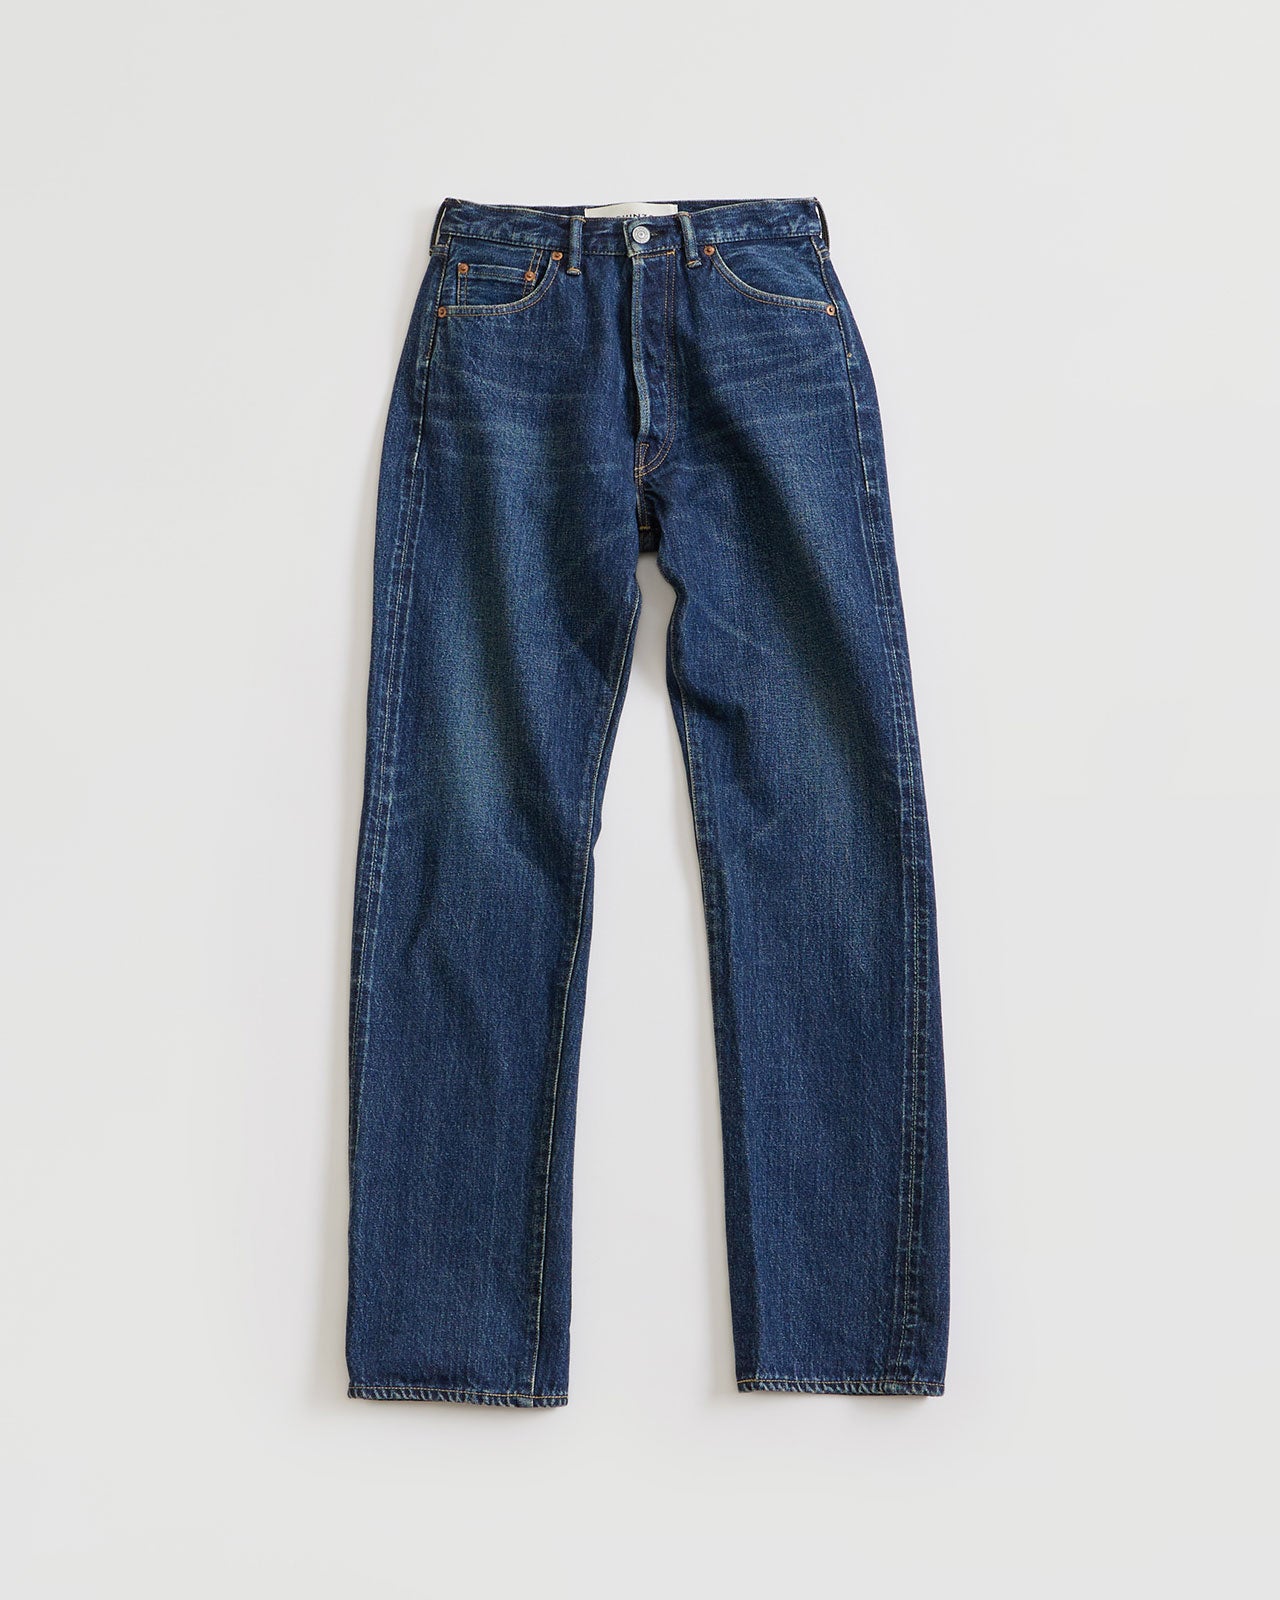 Denim Plain Basic Mens Jeans, Waist Size: 28-30-32-34-36 at Rs 420/piece in  New Delhi